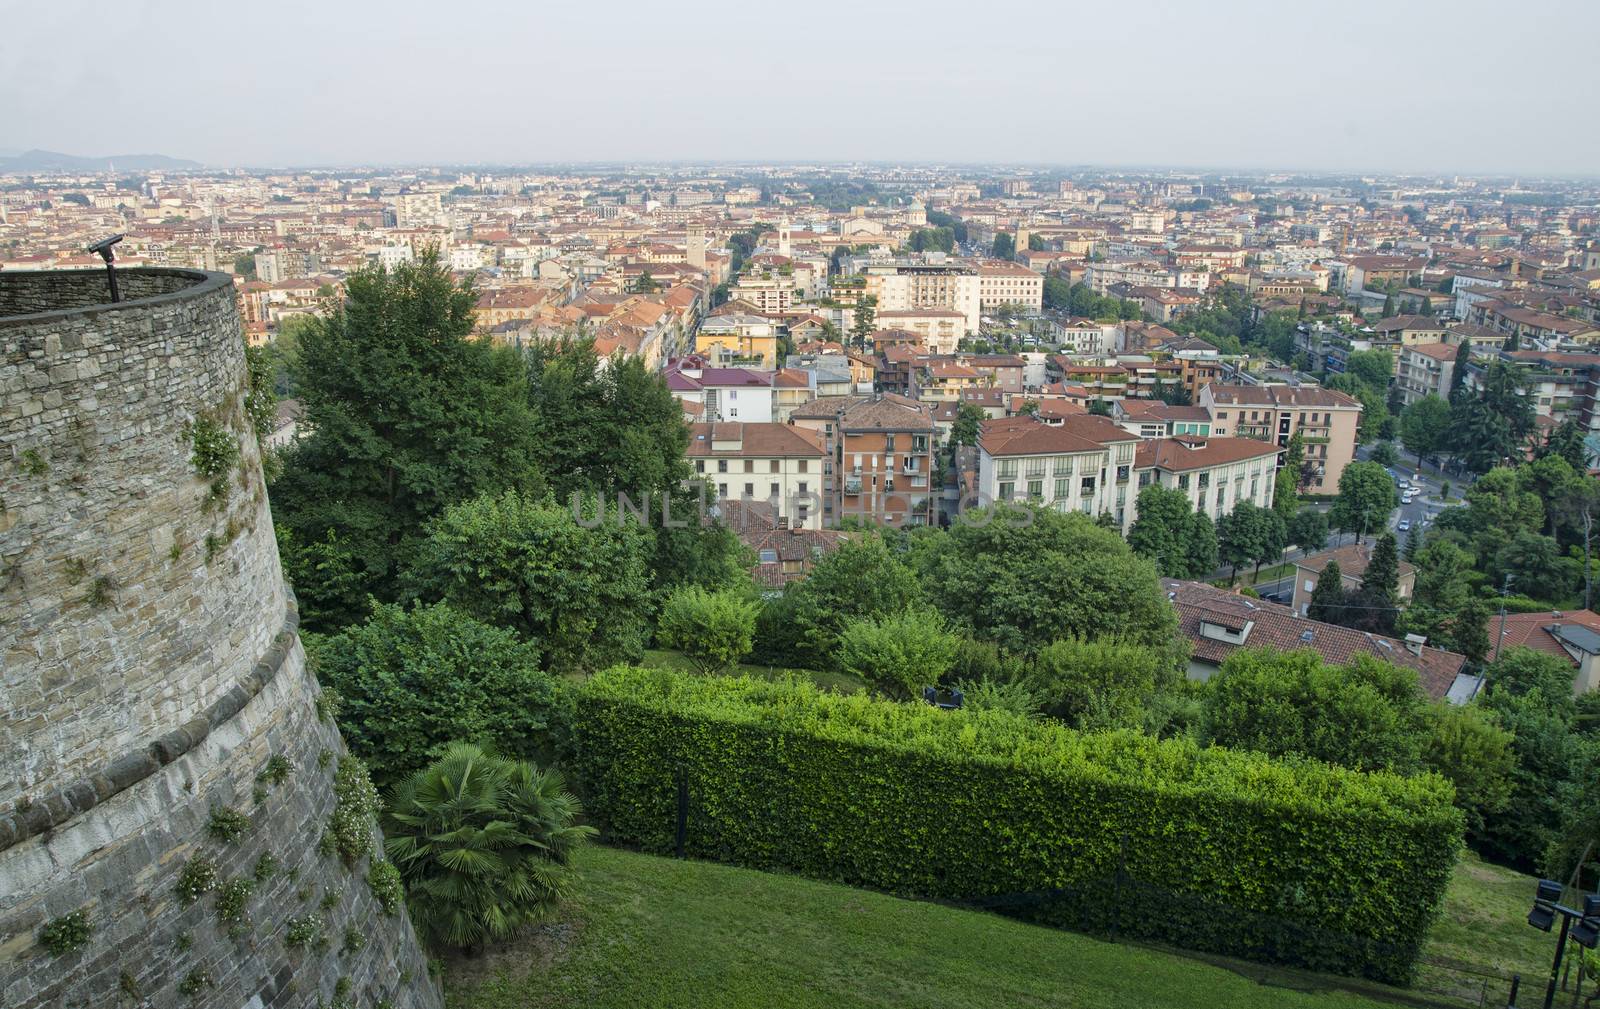 cityscape of Bergamo, Italy